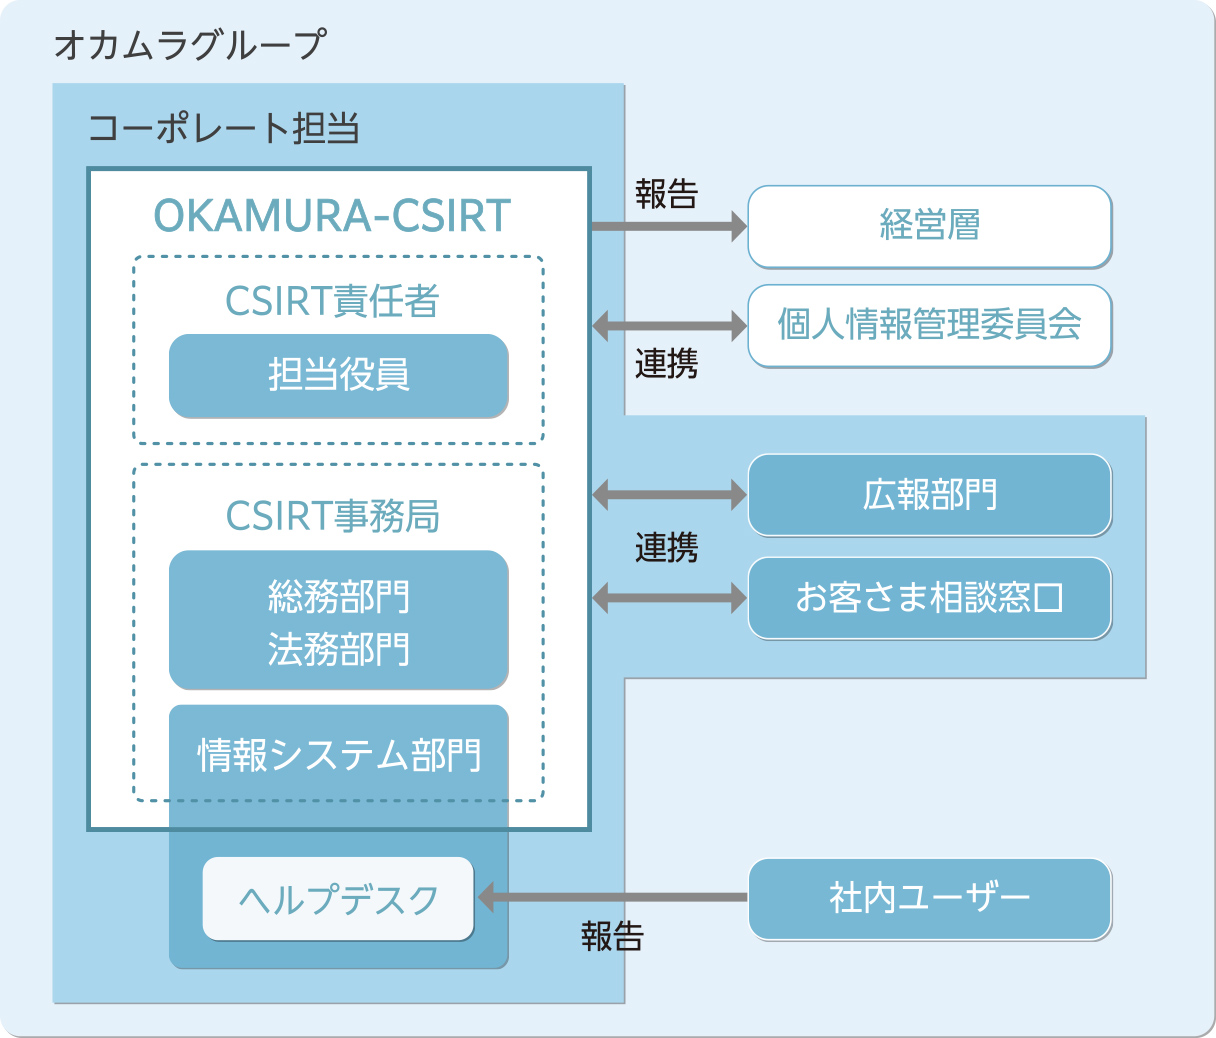 OKAMURA-CSIRT の位置付けと構成